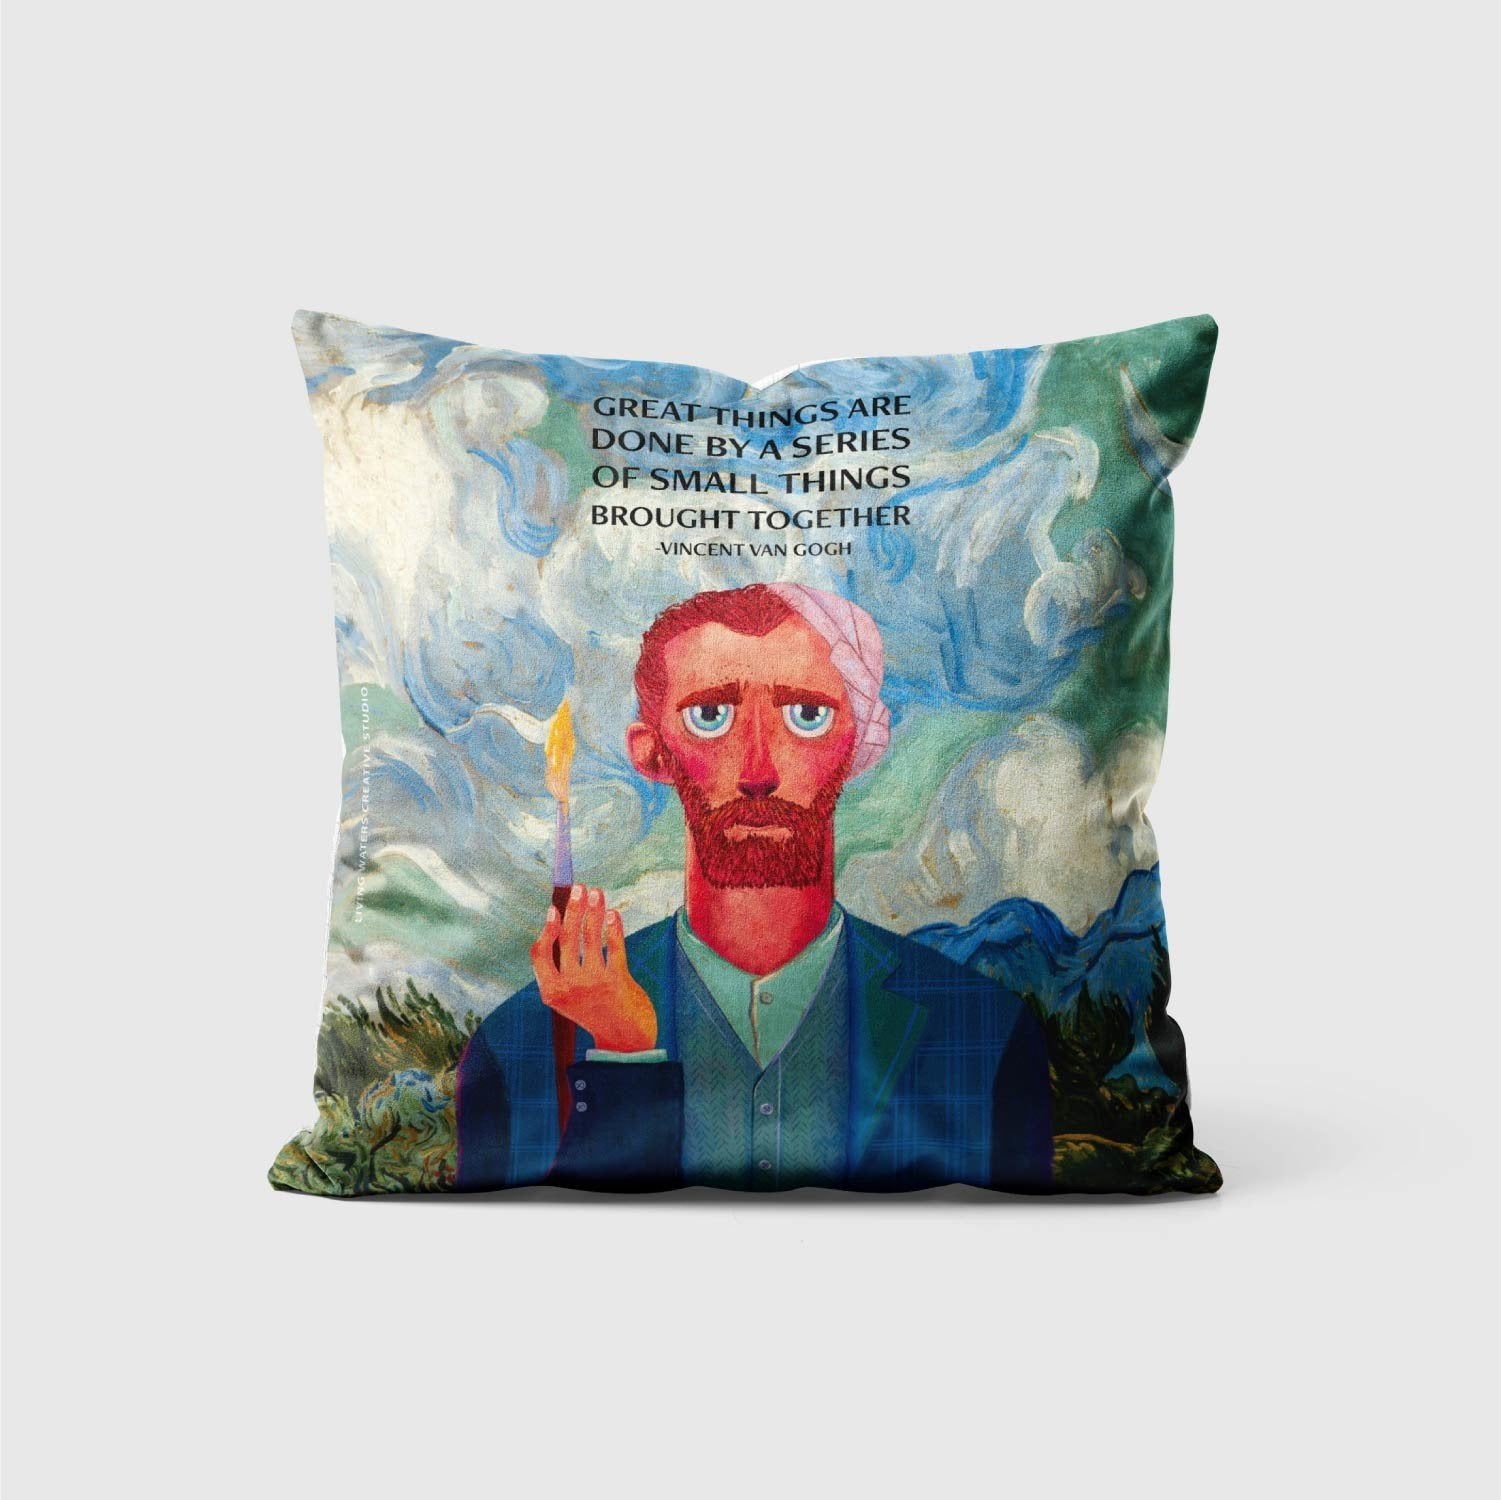 The Van Gogh Cushion Cover